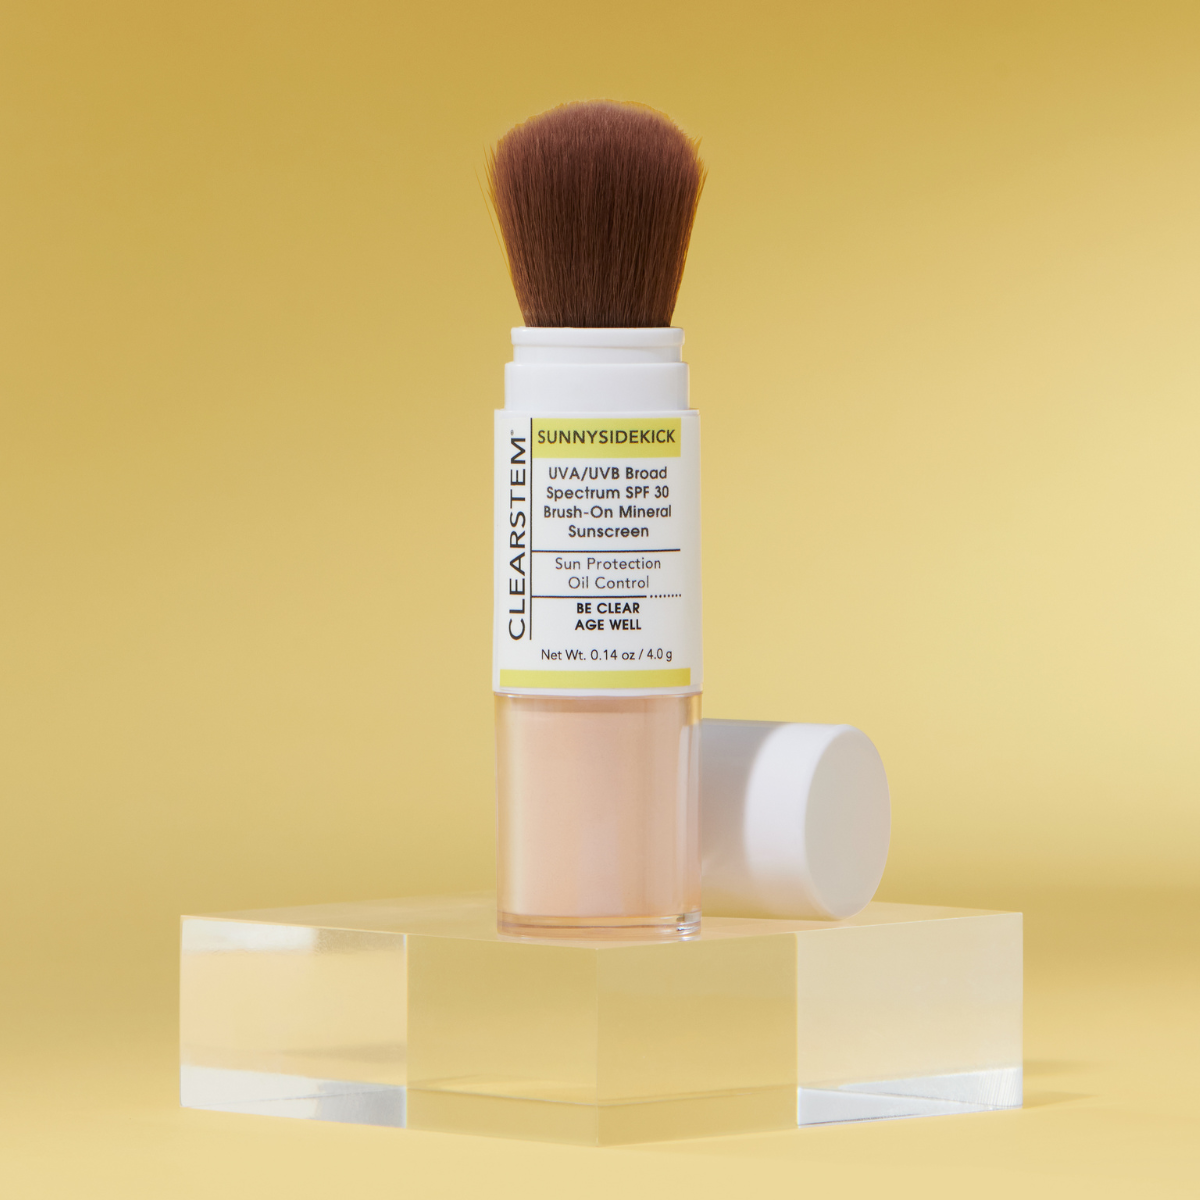 CLEARSTEM SUNNYSIDEKICK™, a brush-on mineral powder sunscreen for all skin types